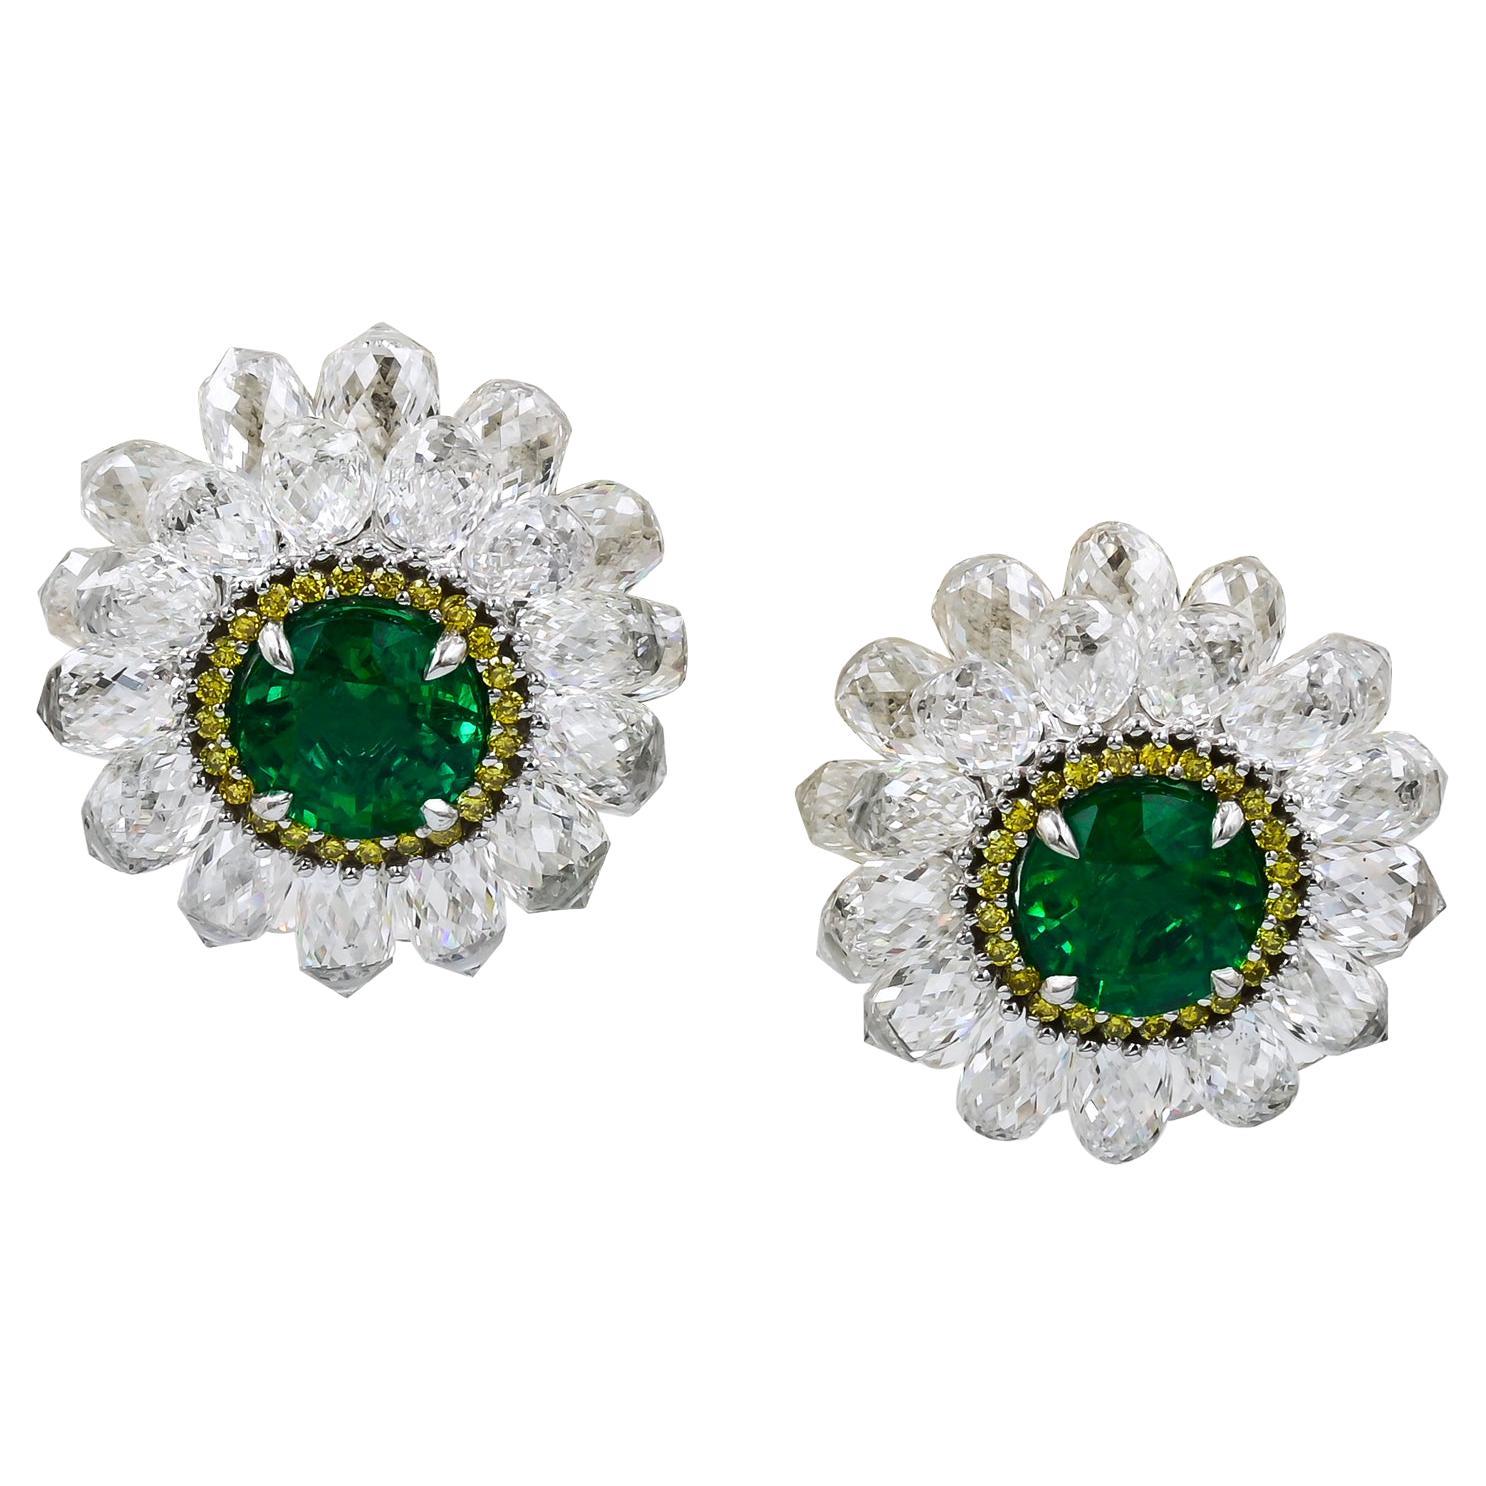 Certified 0.96 & 0.97 Carat Zambian Emerald Diamond Earrings